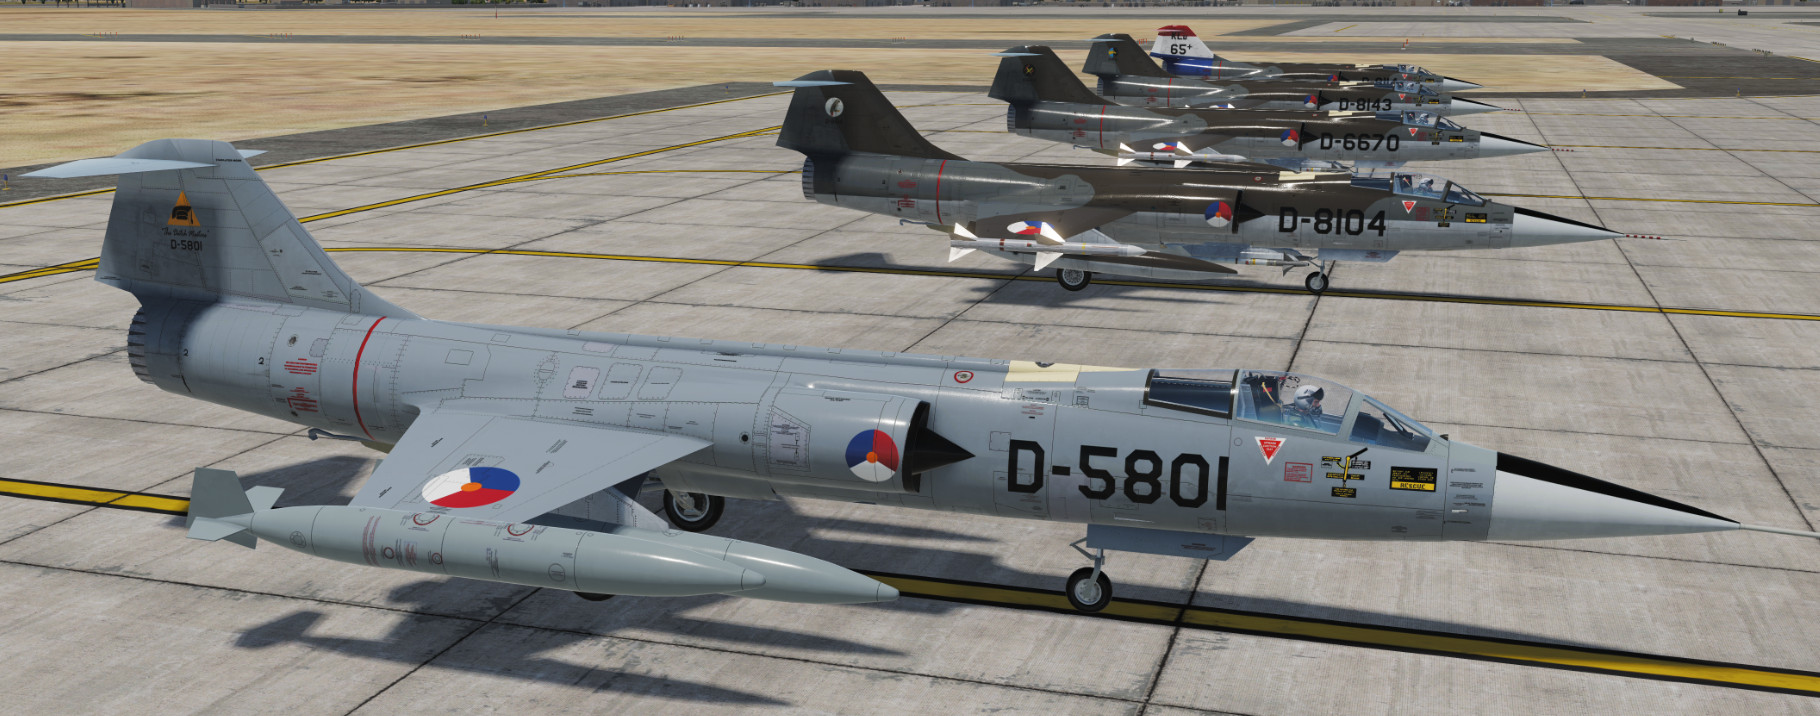 Royal Netherlands Airforce F-104G pack for VSN F-104